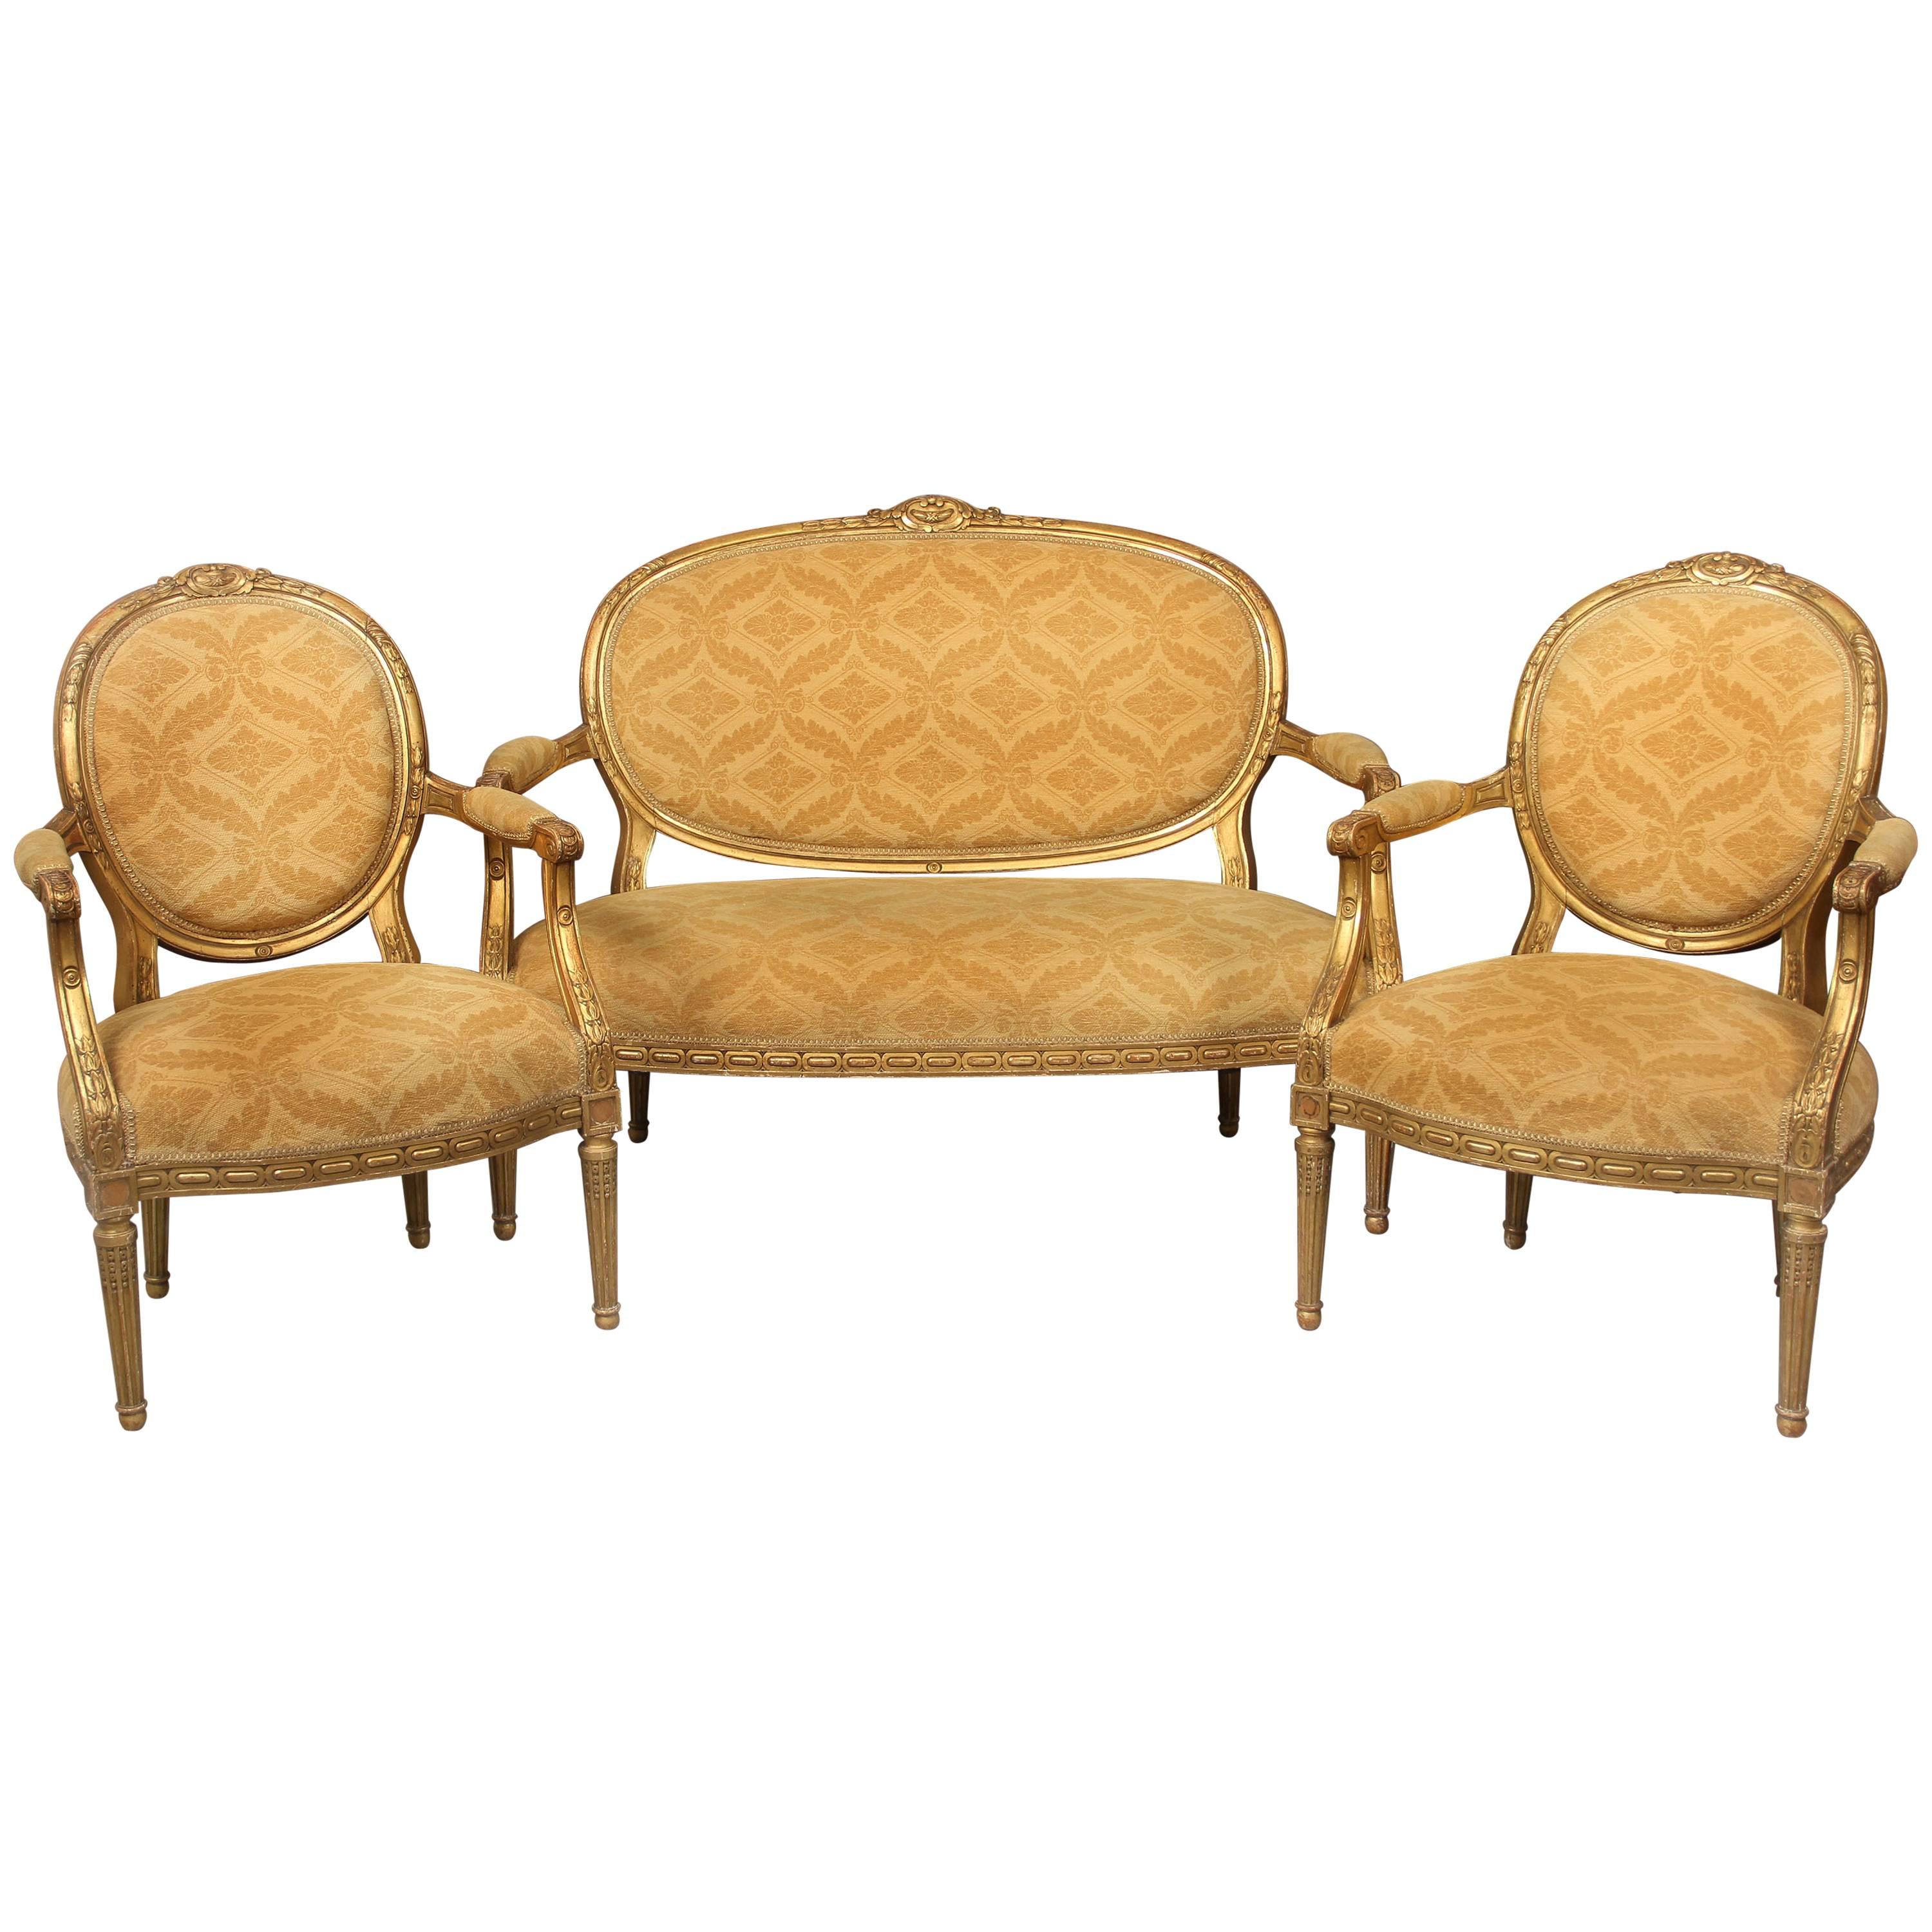 19th Century Three-Piece Louis XVI Style Giltwood Parlor Set